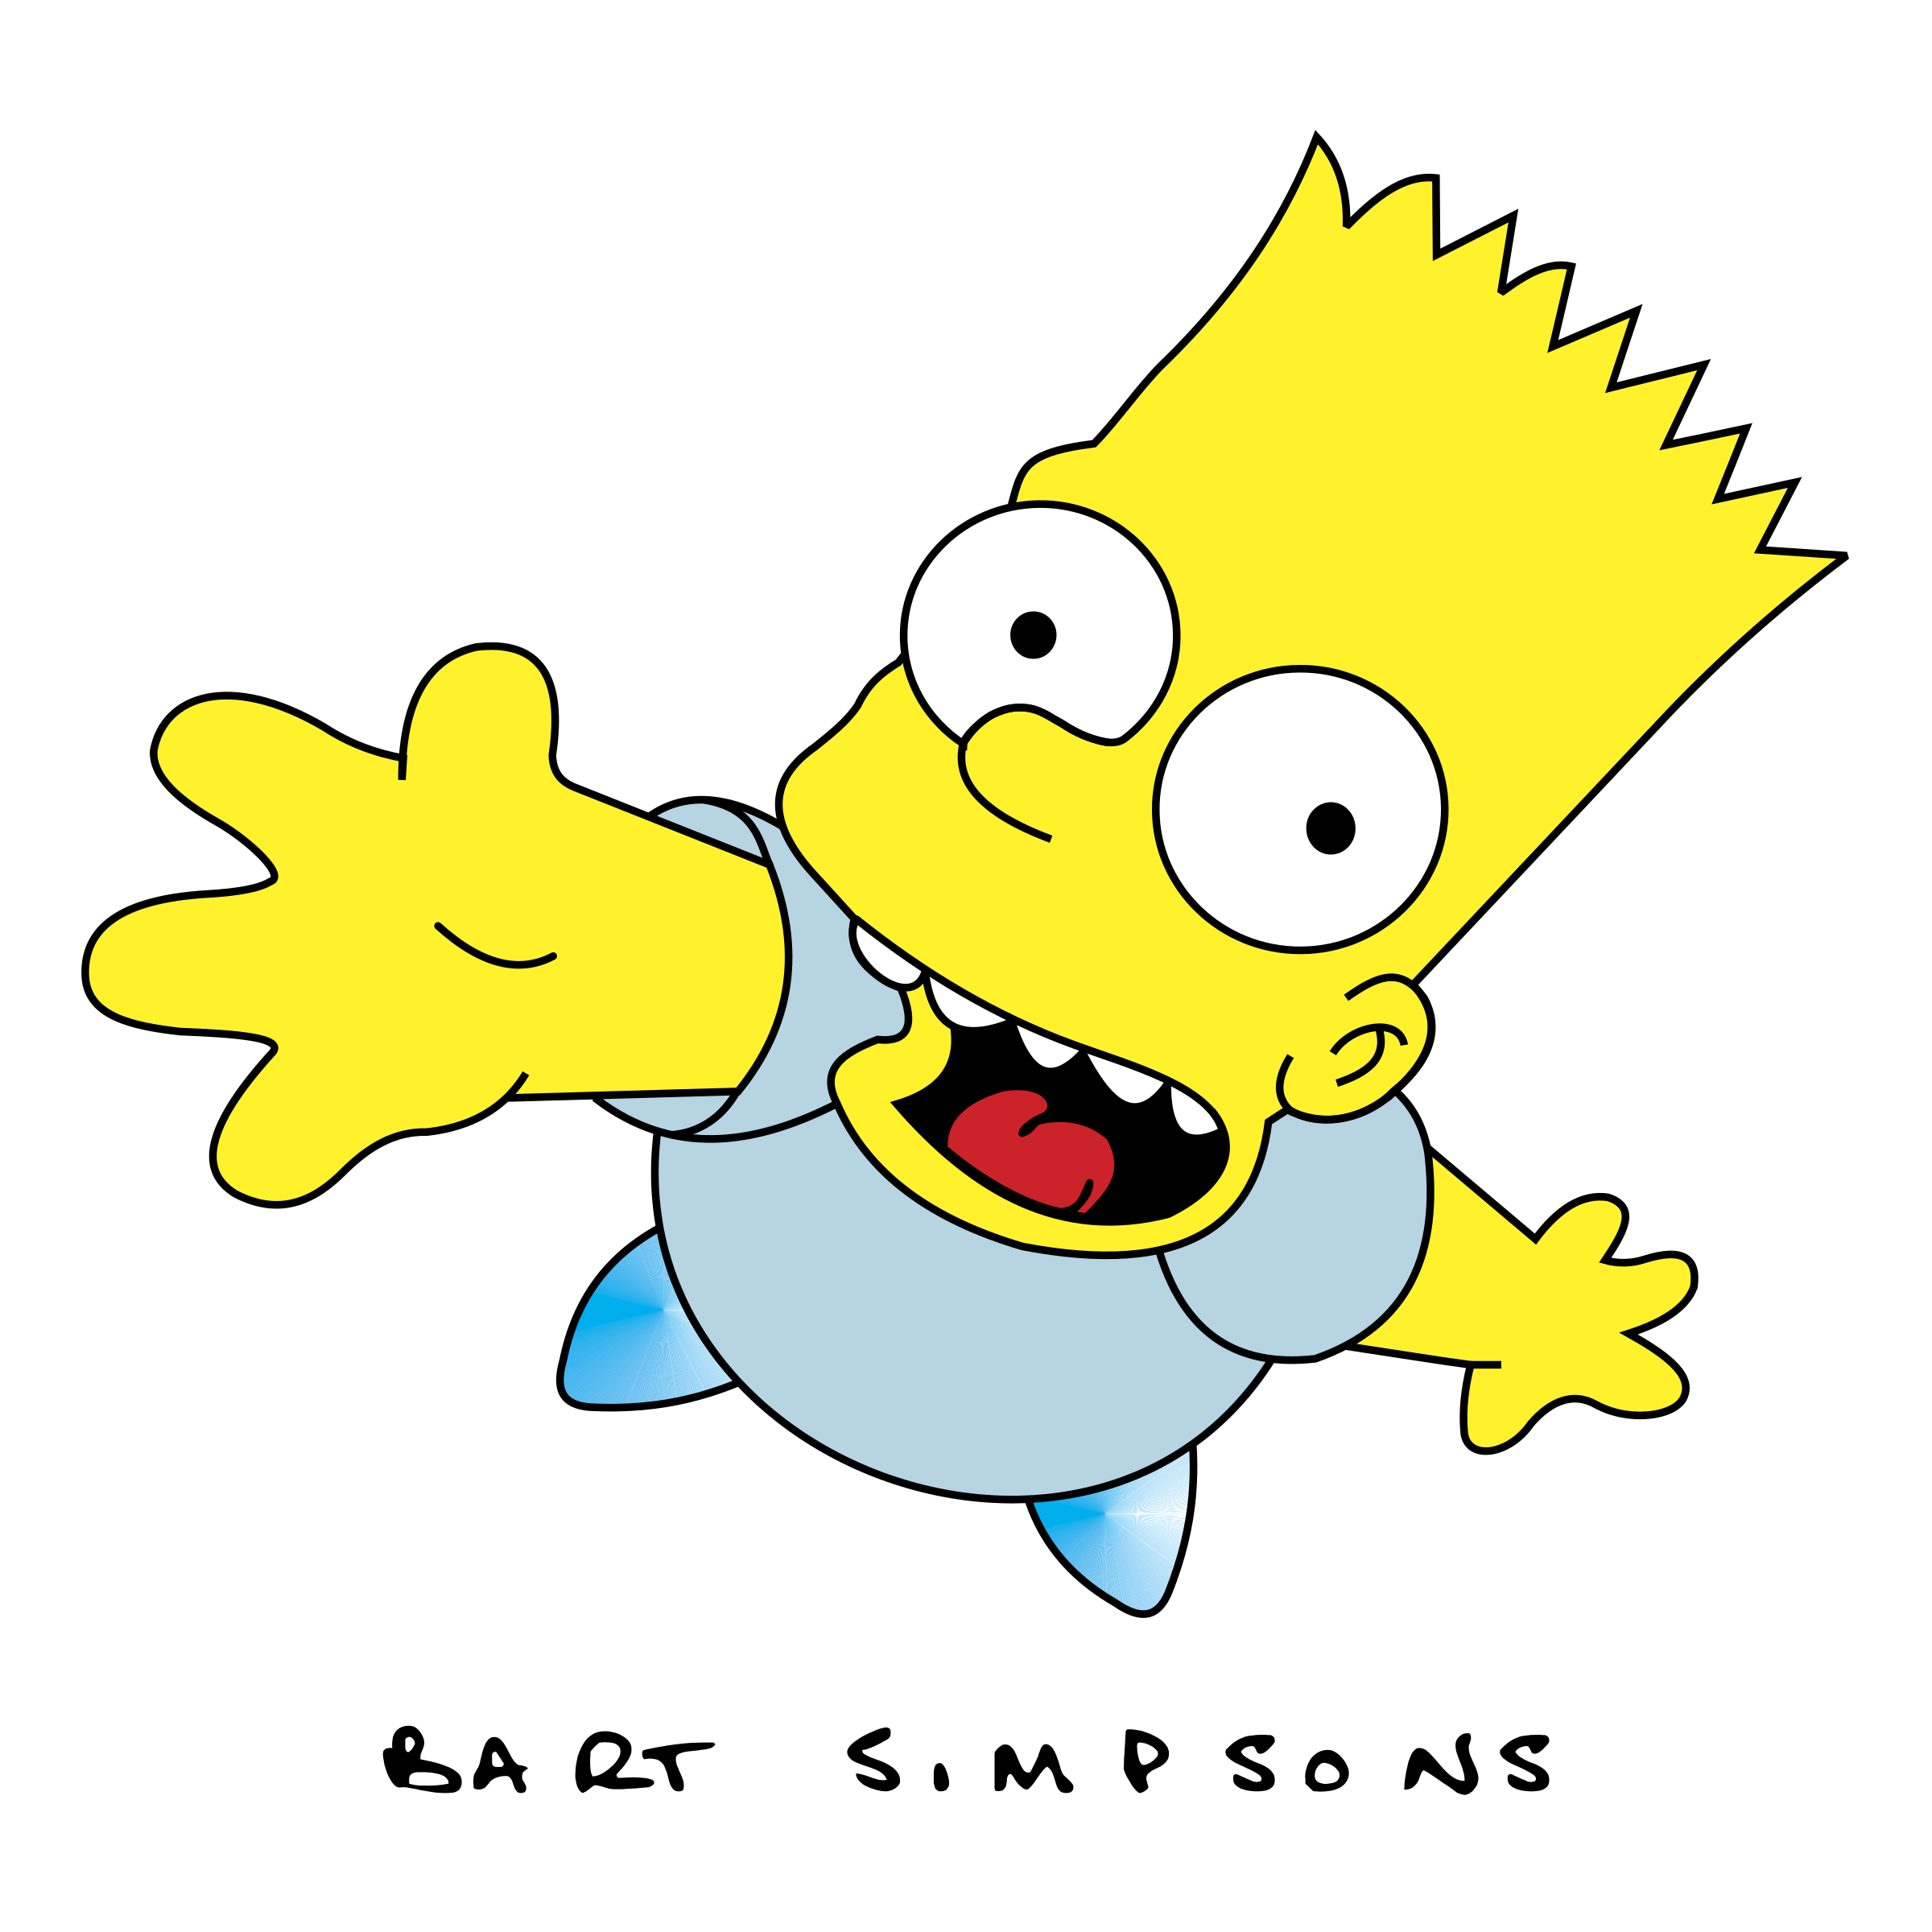 Simpson Logo - Bart Simpson Logo PNG Transparent & SVG Vector - Freebie Supply